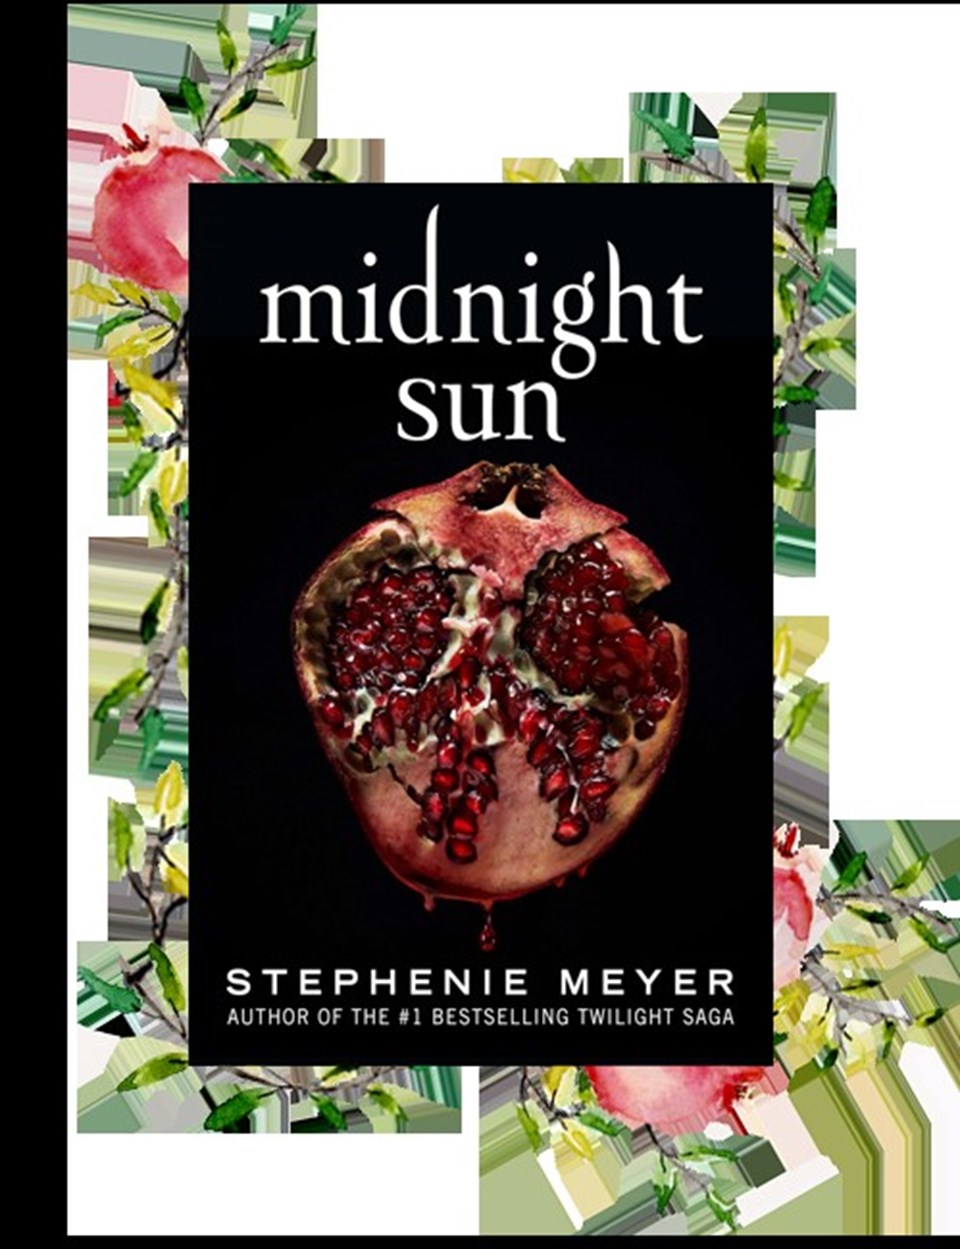 Alacakaranlık (Twilight) serisinin yeni kitabı Midnight Sun yolda - 2